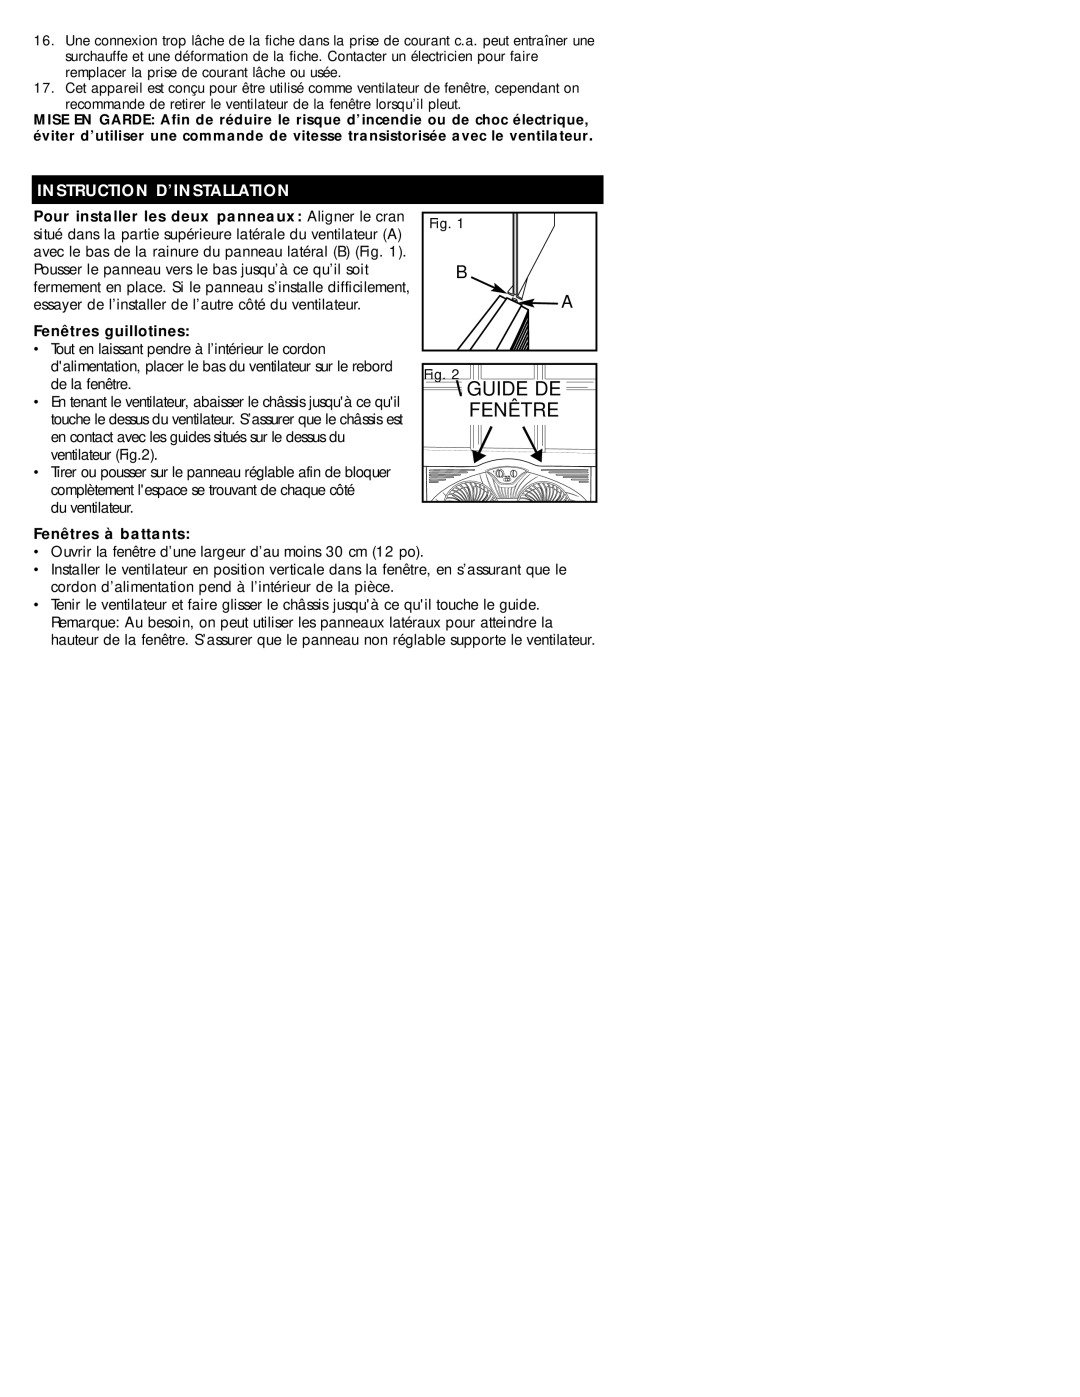 Honeywell HW-400C Series owner manual Guide De, Instruction D’Installation, Fenêtres guillotines, Fenêtres à battants 